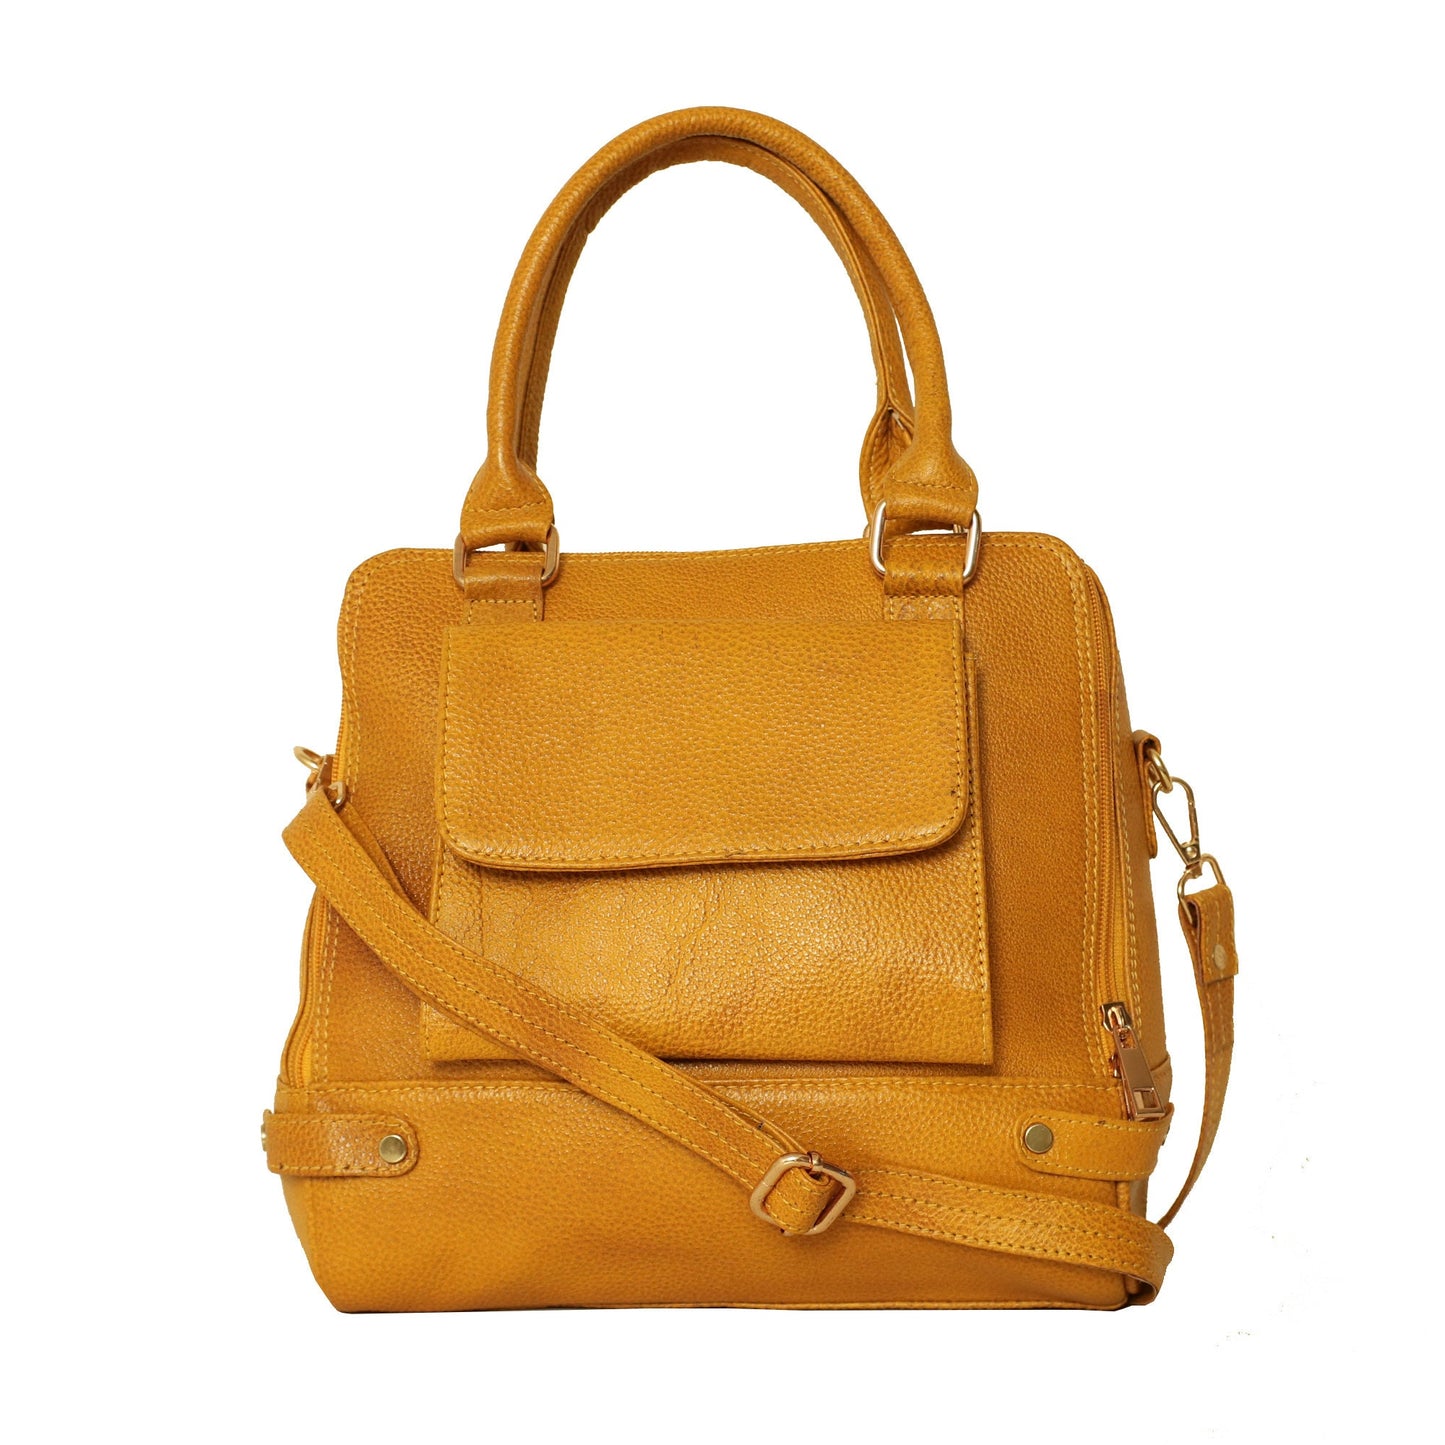 Yellow Leather Handbag for Women's Party Handbag Long Handle Crossbody Bag for Women Gift for Her Everyday Handbag Satchel Bag